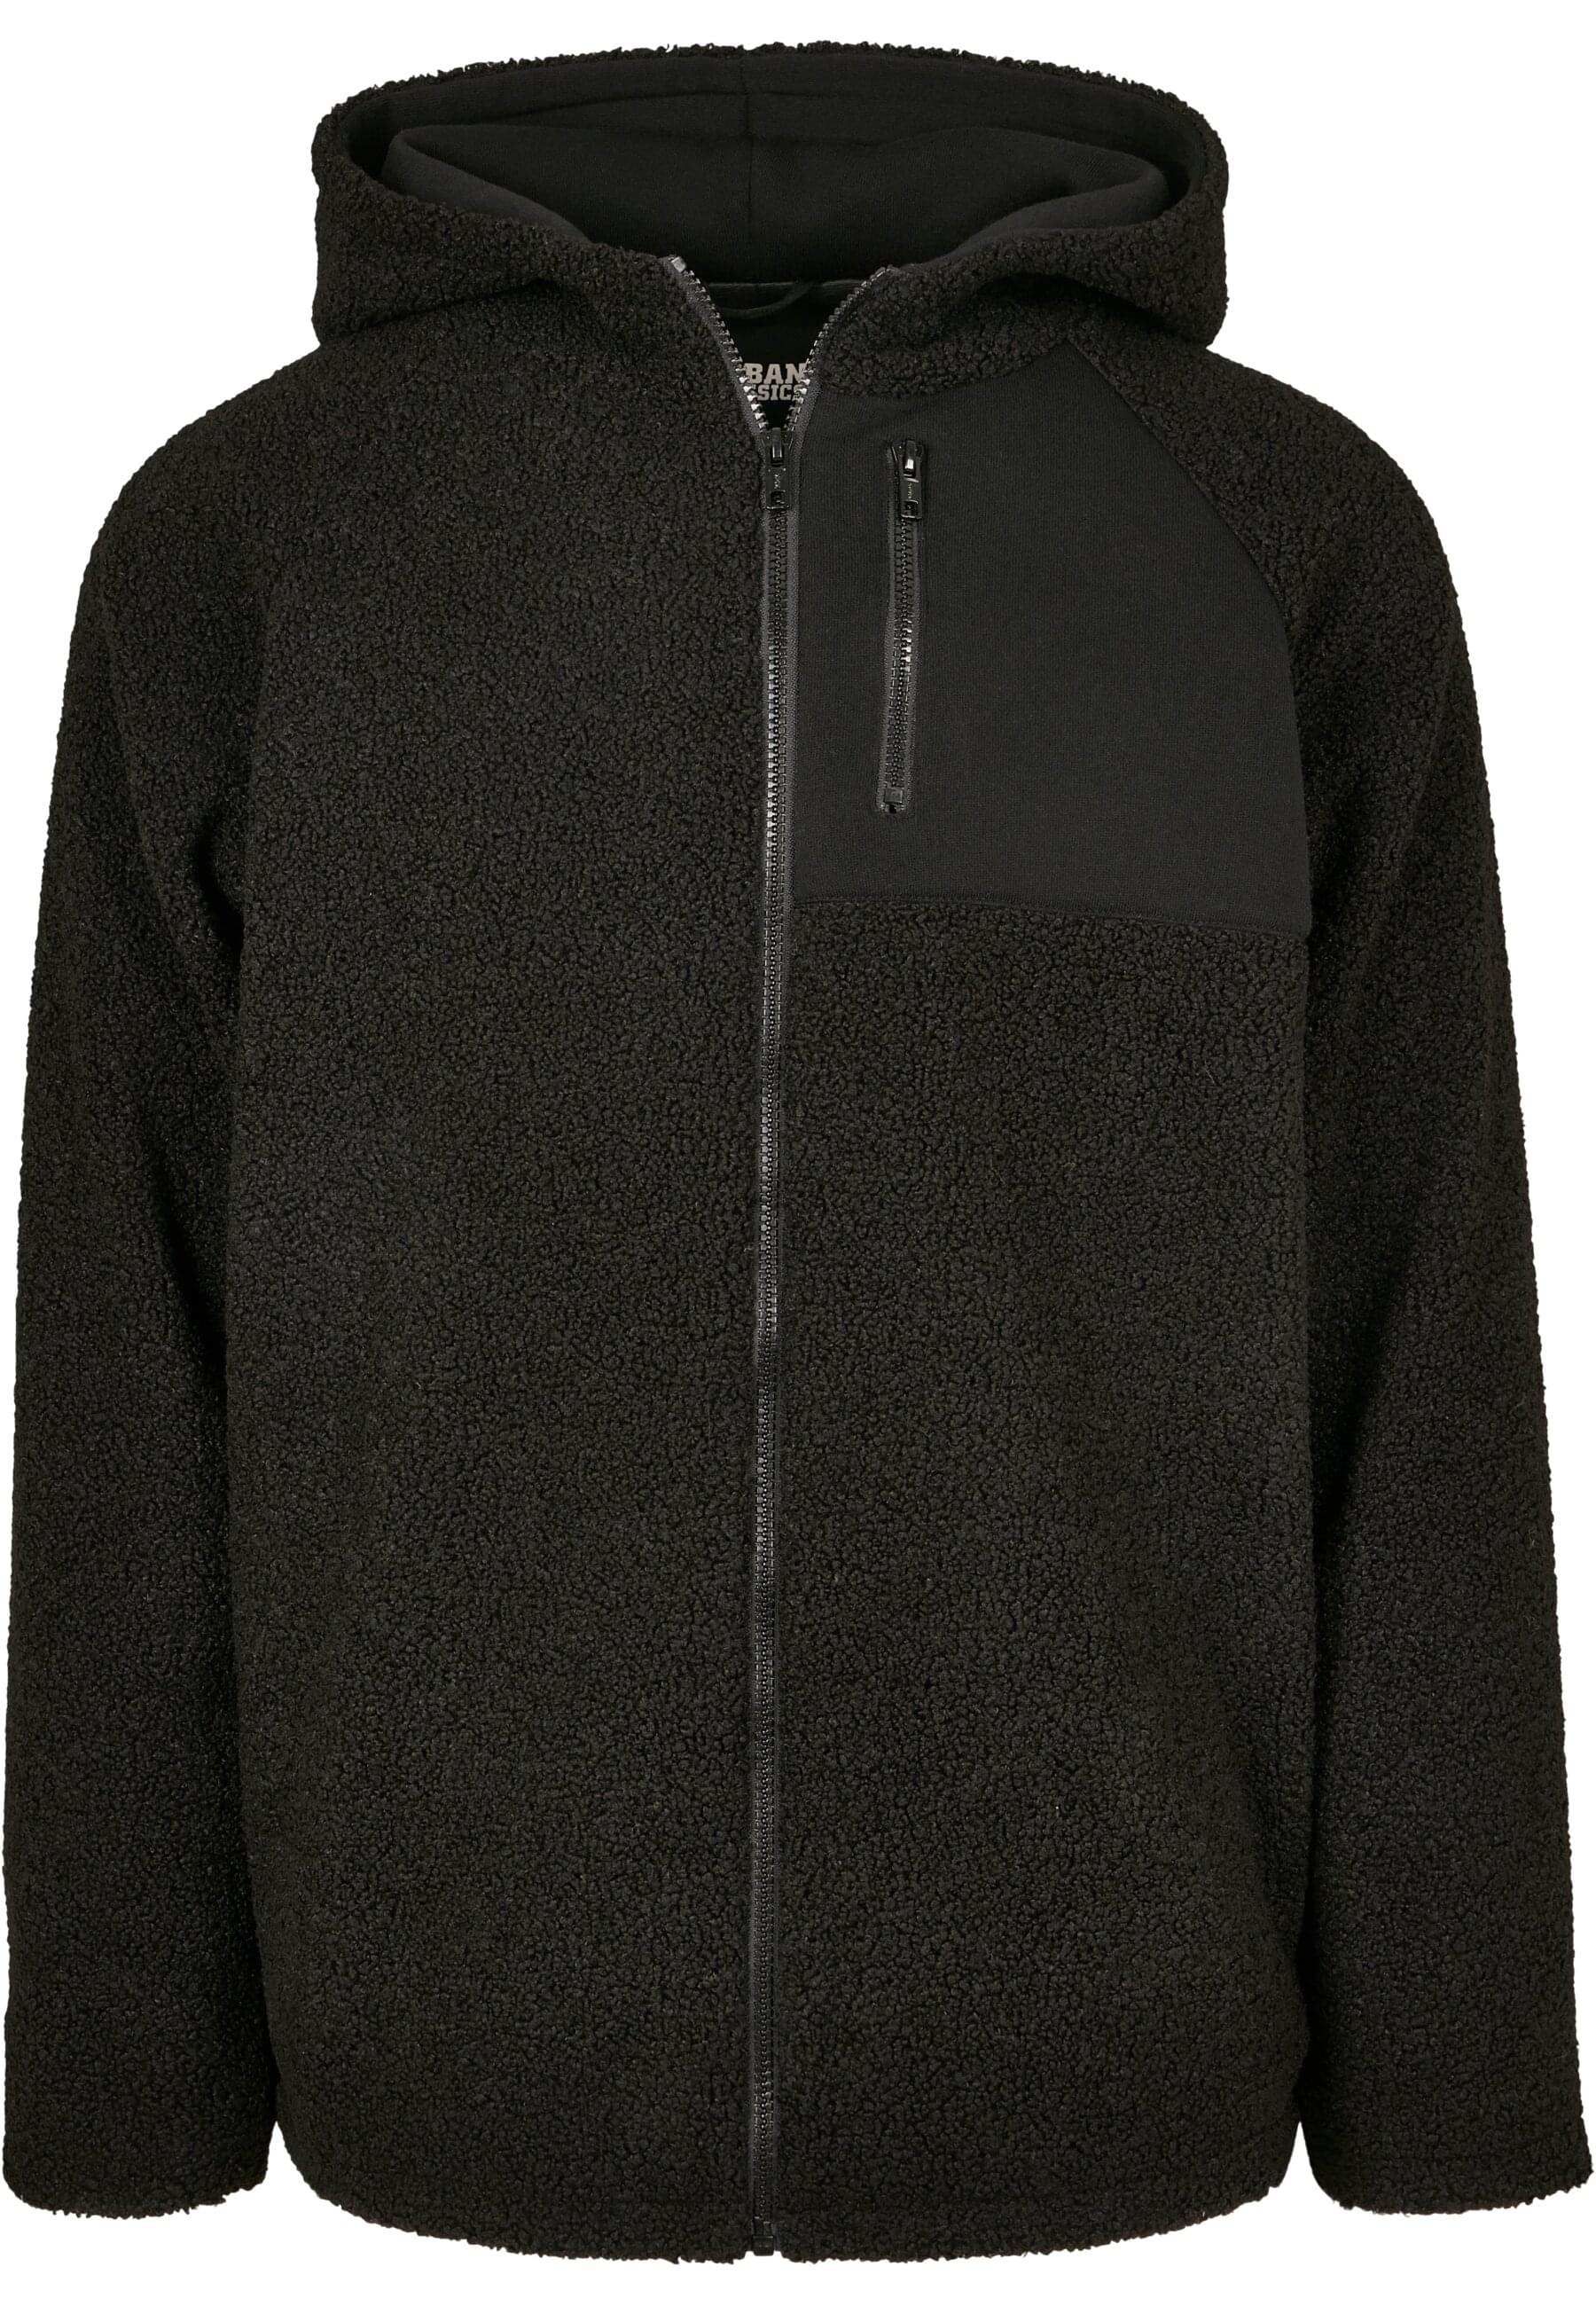 Urban Classics Herren Hooded Sherpa Zip Jacket Jacke, Schwarz (Black 00007), Large (Herstellergröße: L)